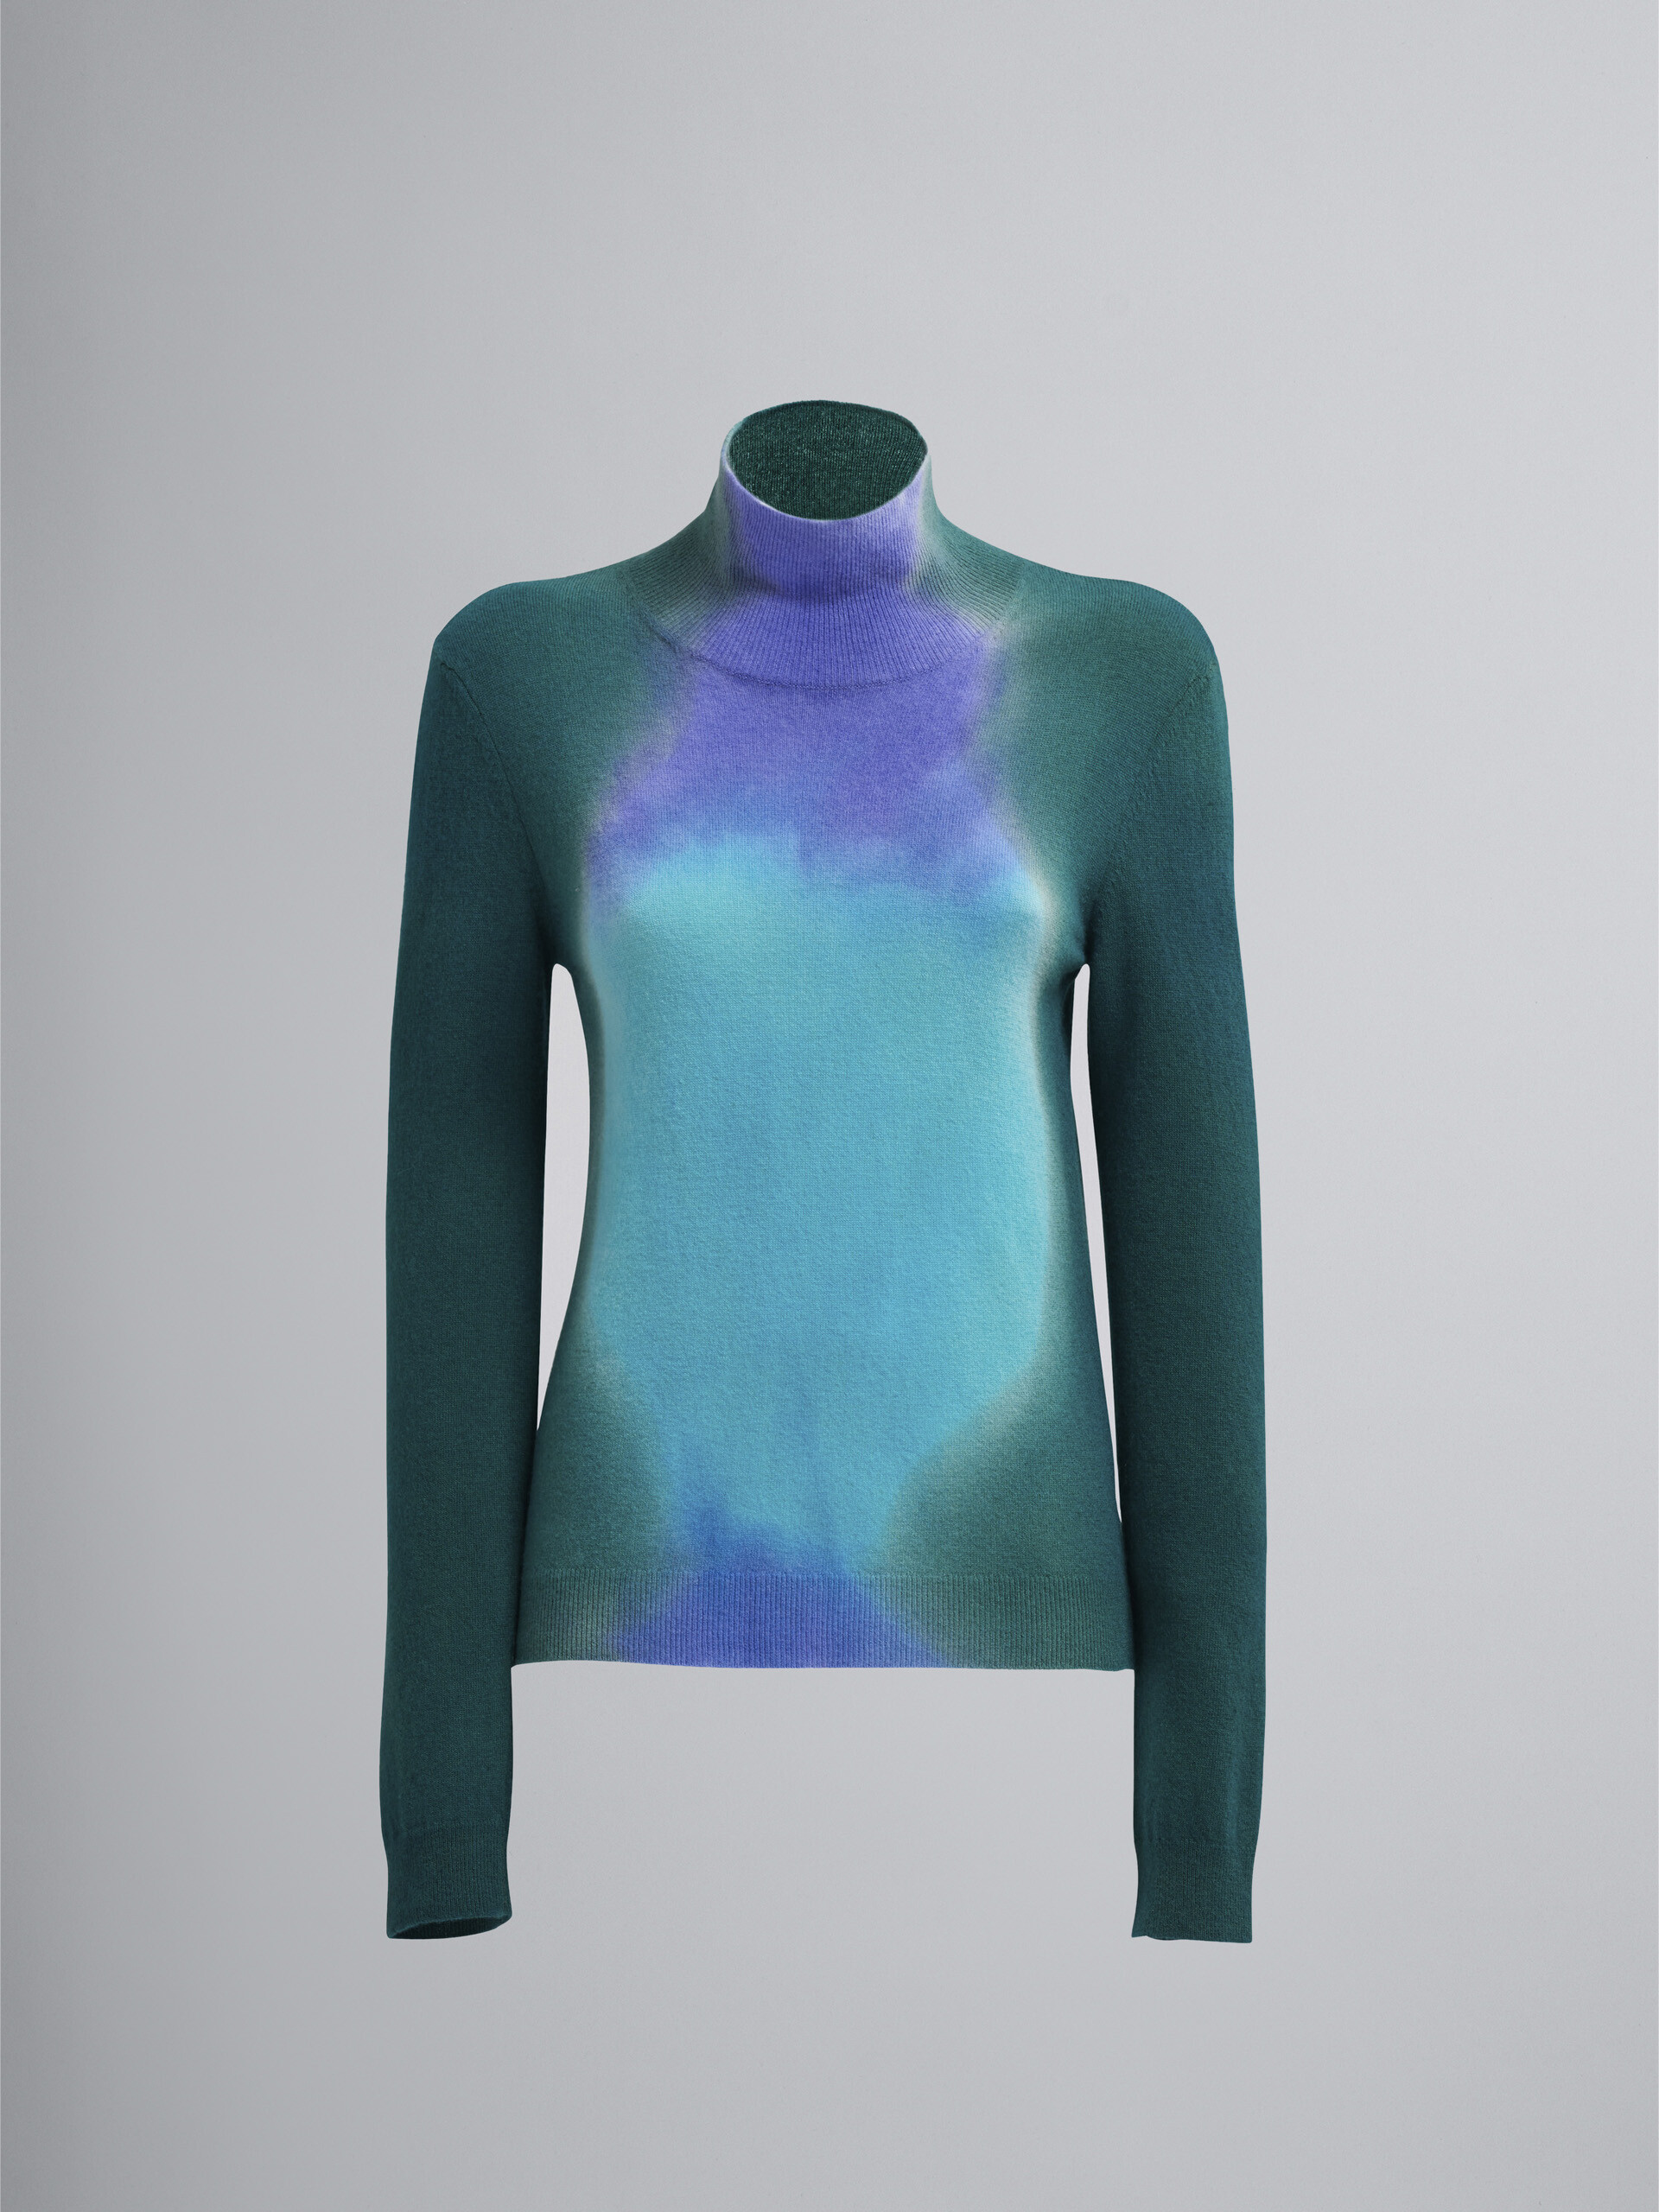 Maglia in lana vergine tinta a mano - Pullover - Image 1